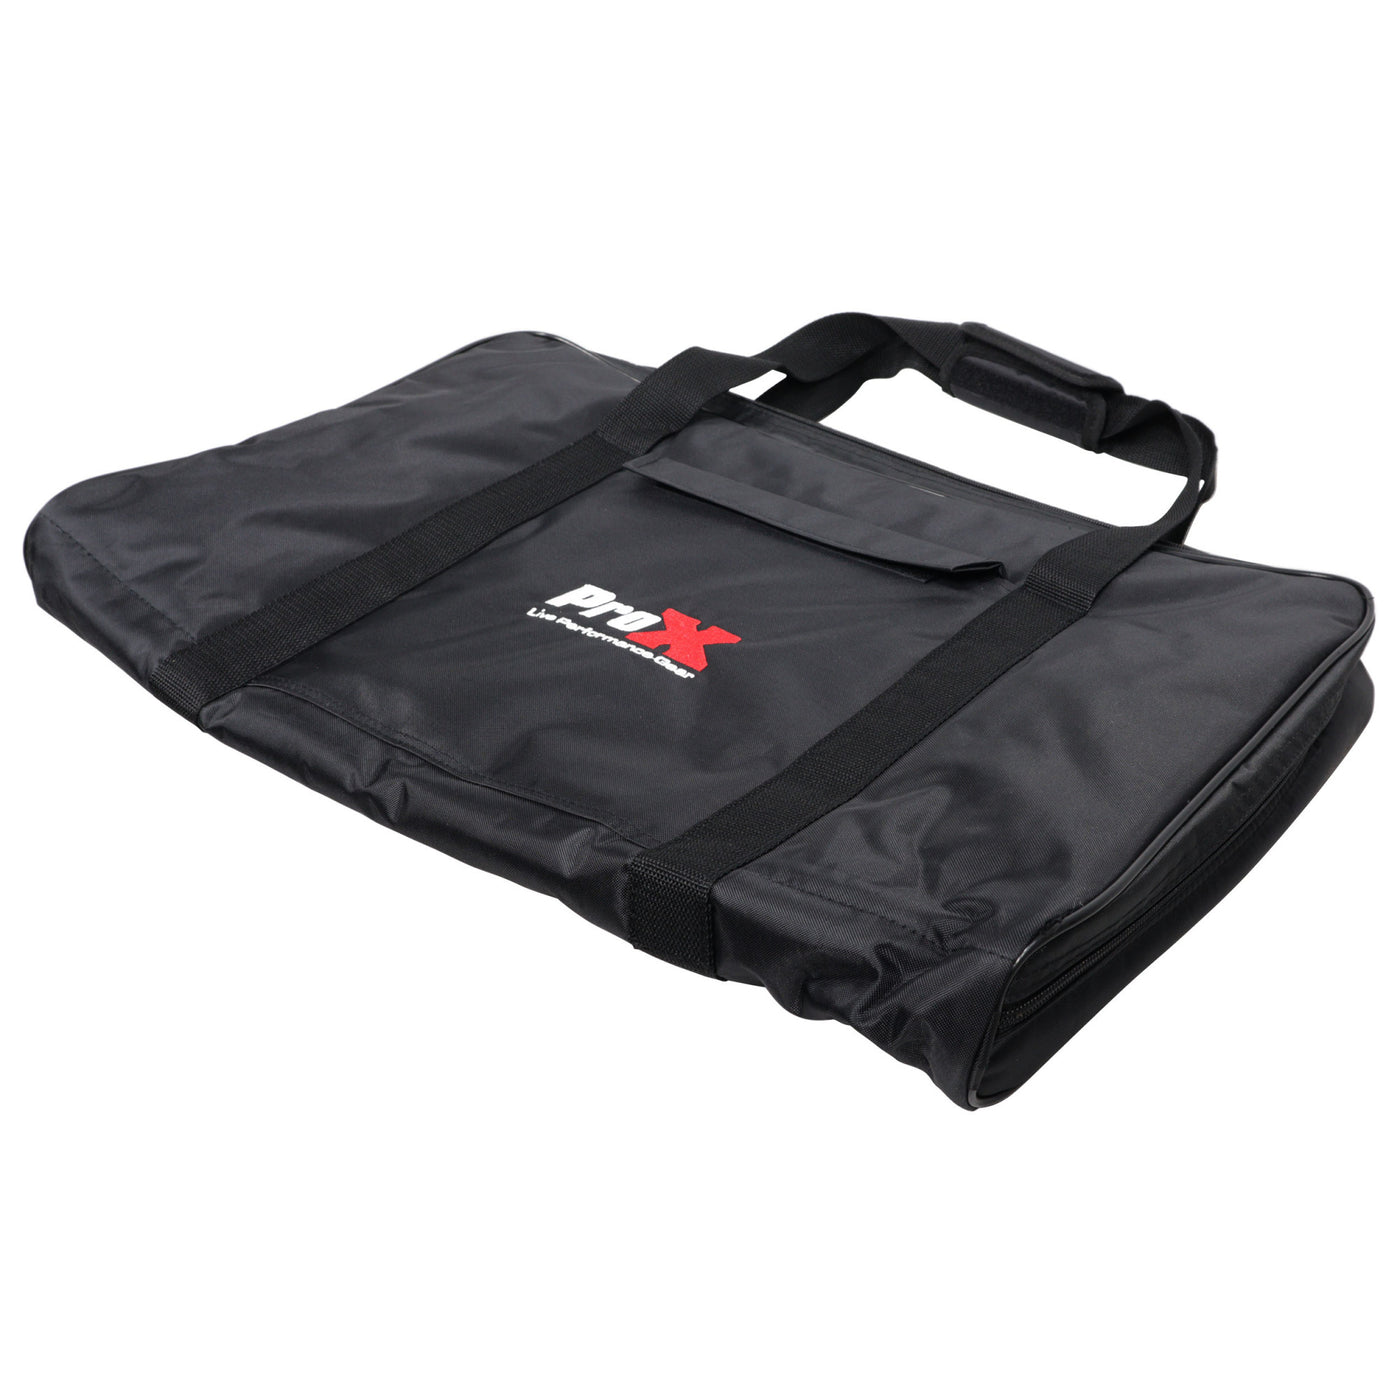 ProX XB-MDDJSR2 MANO Series Travel Bag with Handle, Fits DDJ-SR2, DDJ-RR, MIXSTREAM PRO and Similar Size DJ Controllers, Pro Audio Equipment Storage